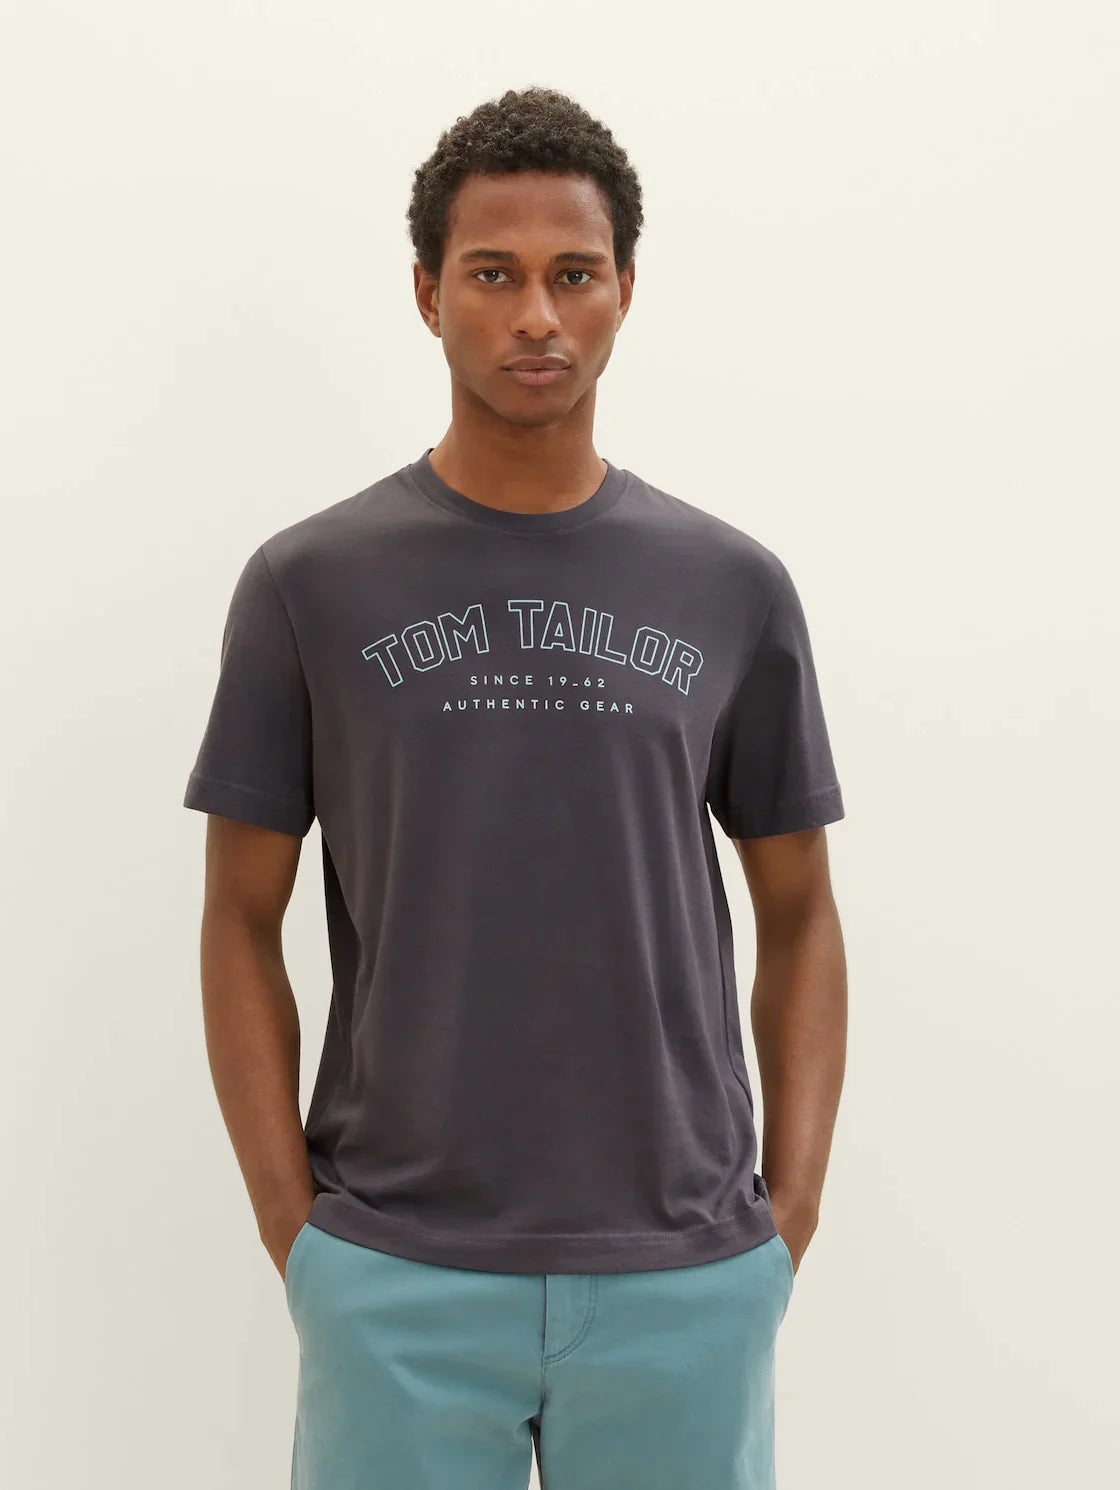 Tom Tailor Logo Printed Tarmac Grey T shirt